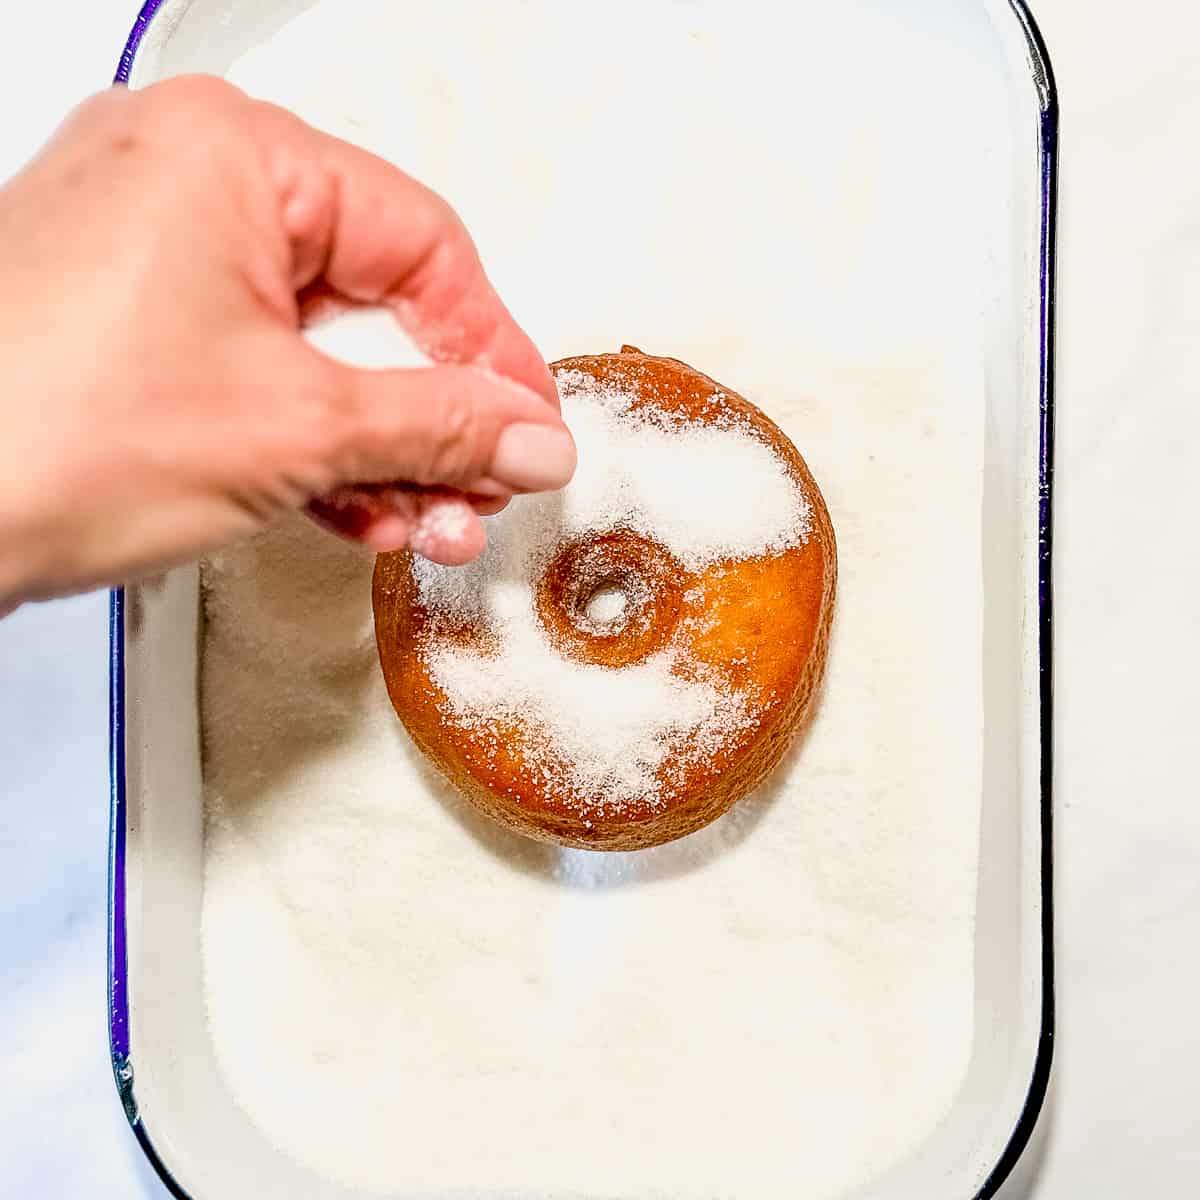 sprinkling sugar on a fried donut.